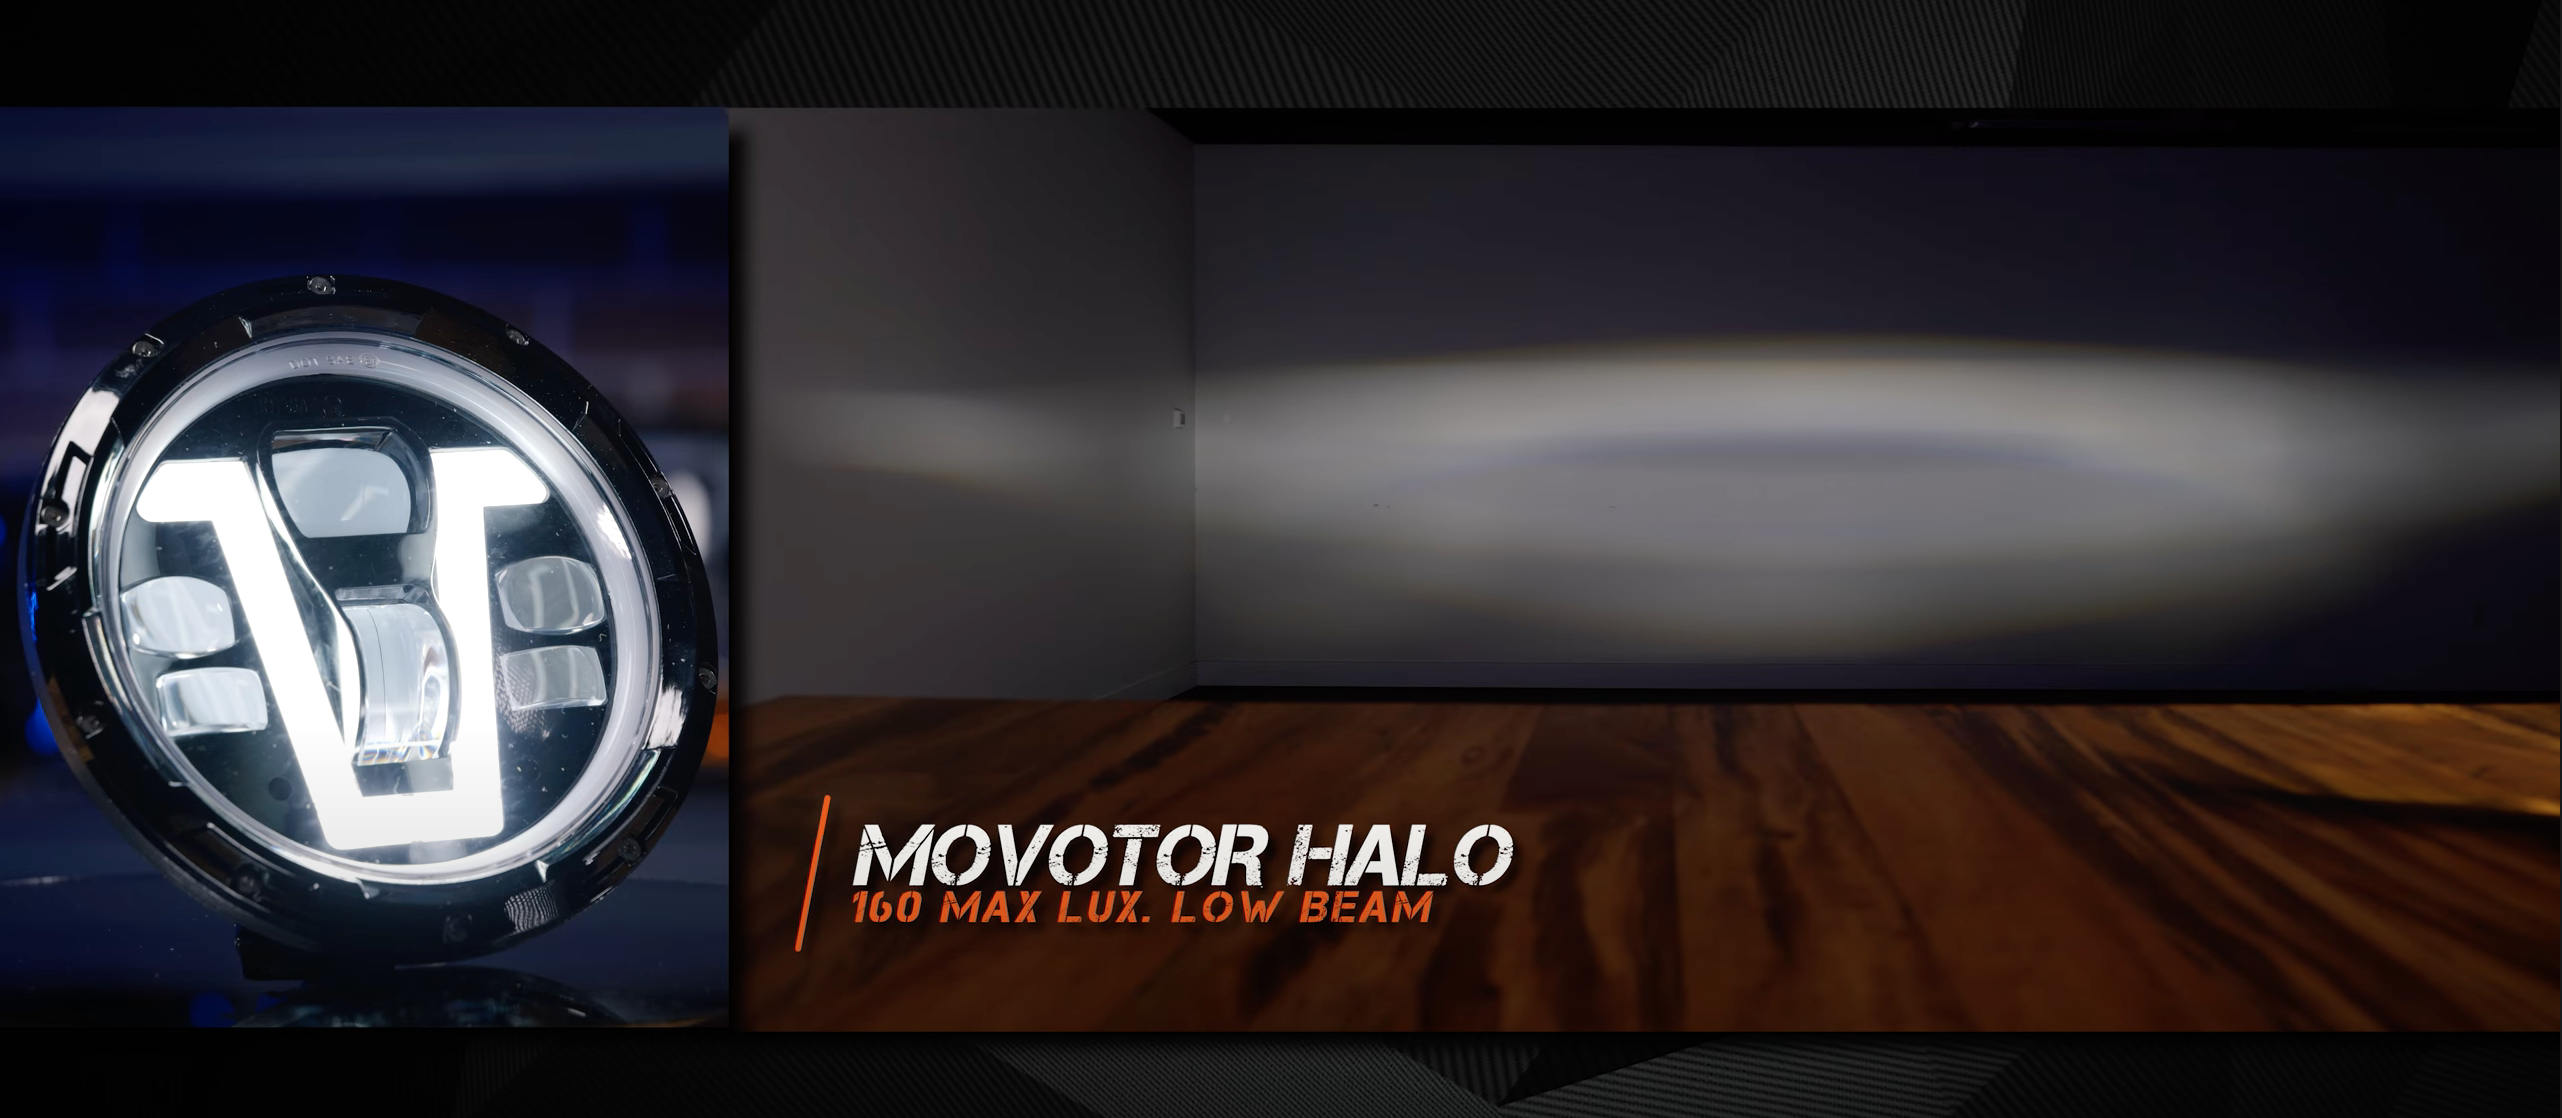 Movotor Halo Sealed Beam Comparison Test Motorcycle Jeep Wrangler 7-Inch Round LED Headlight